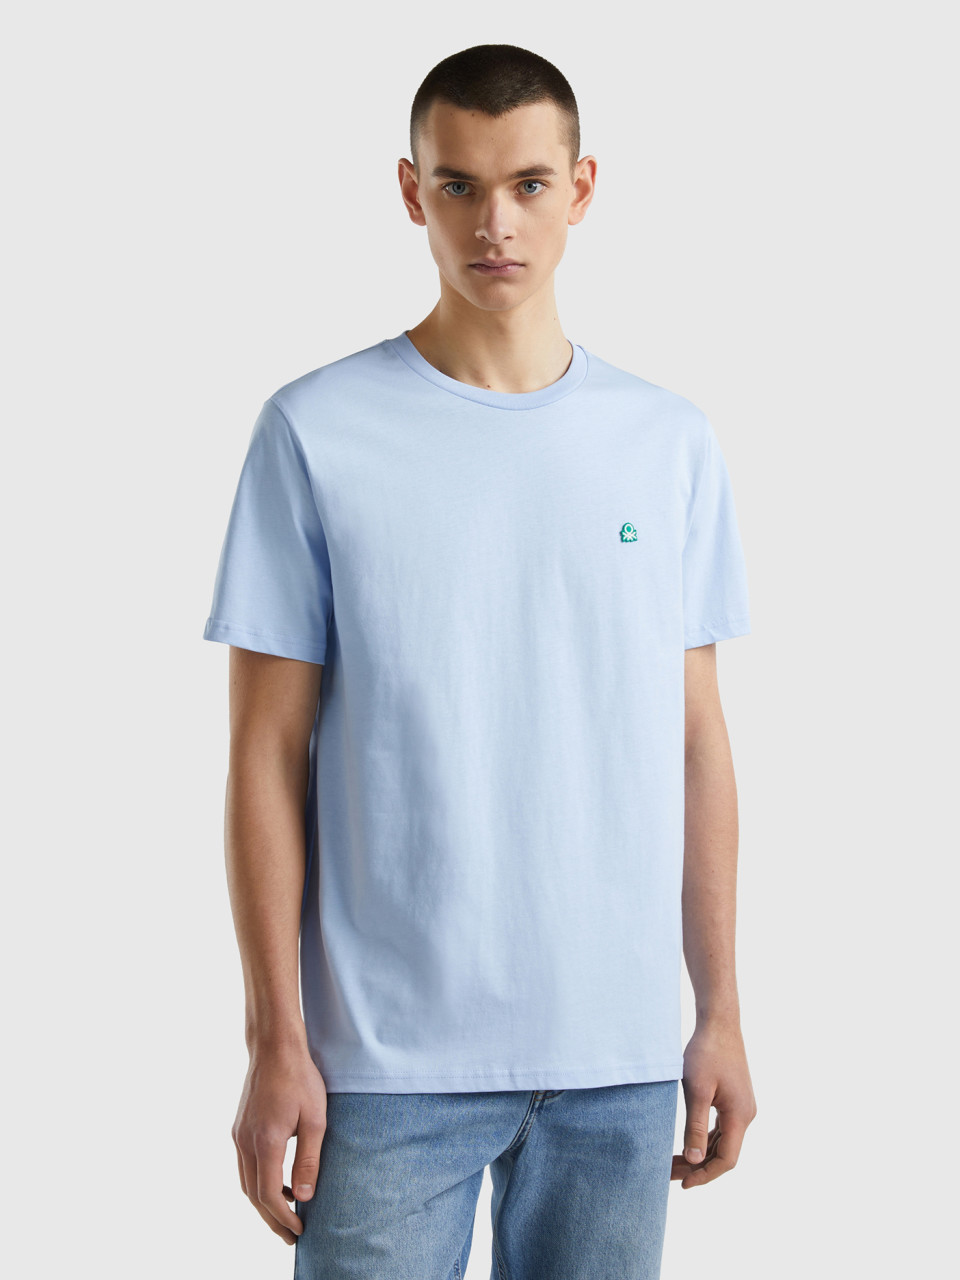 Benetton, 100% Organic Cotton Basic T-shirt, Sky Blue, Men